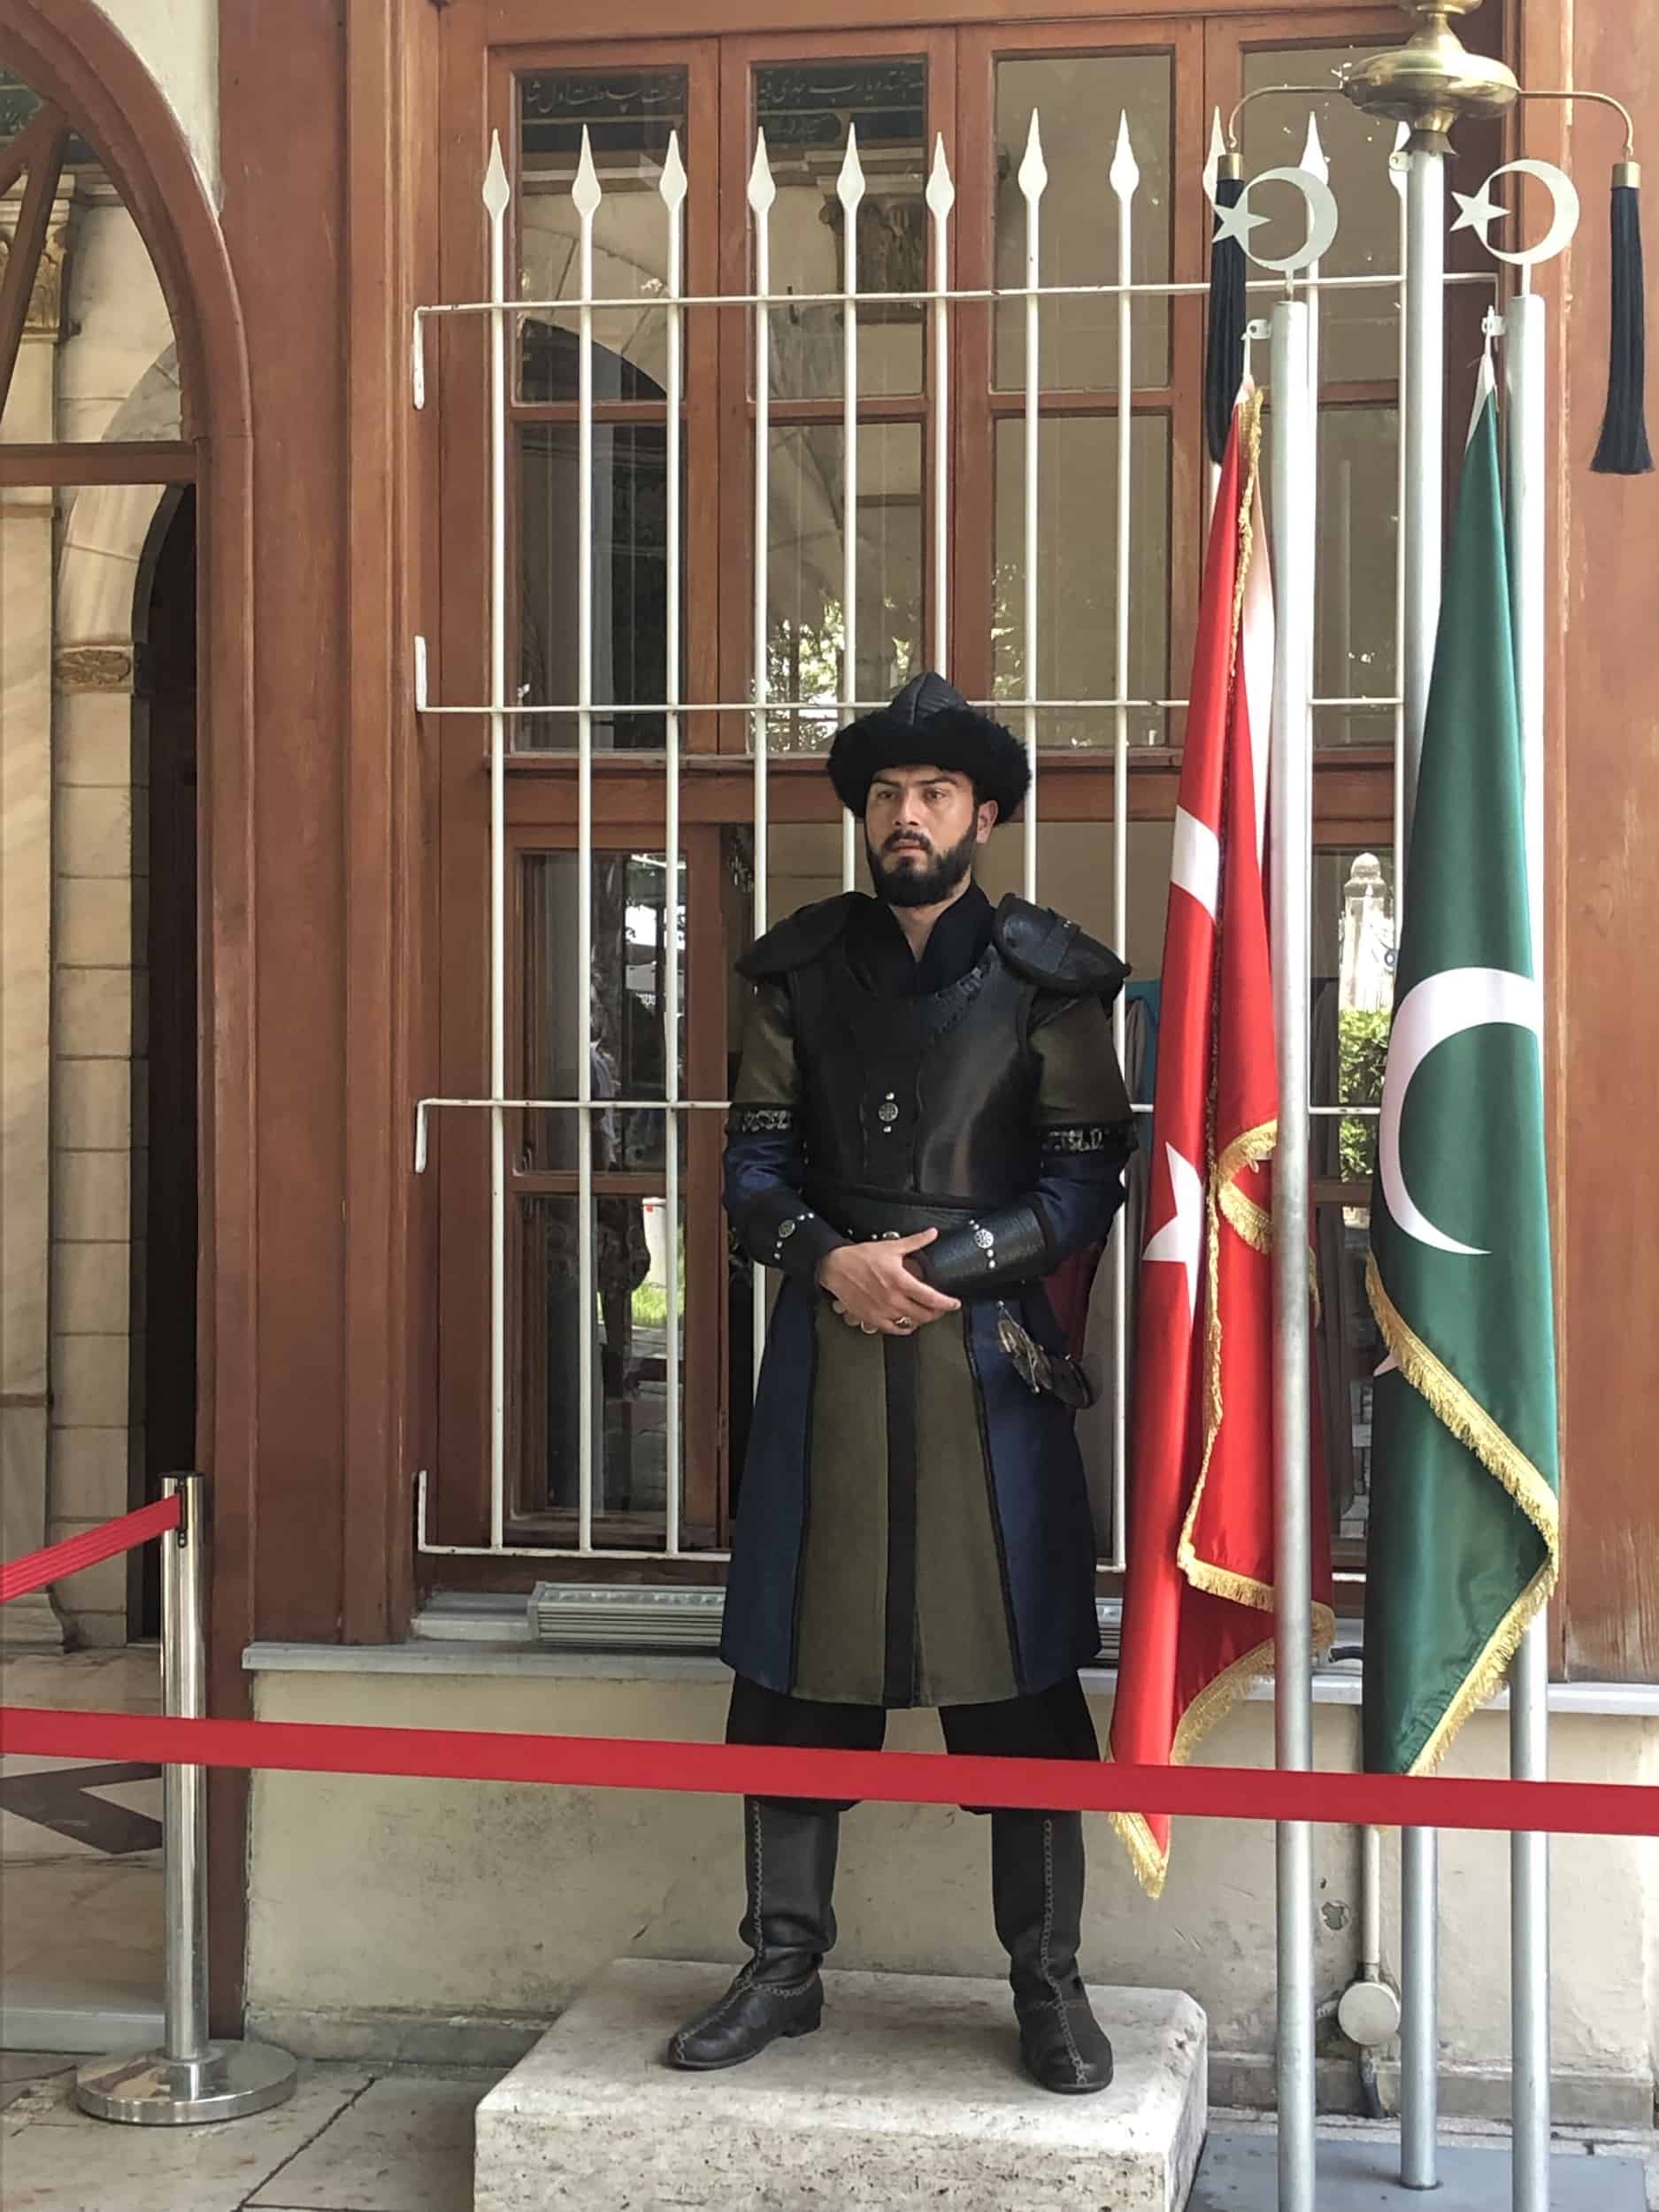 Guard outside the tomb of Osman I at Tophane Park, Bursa, Turkey